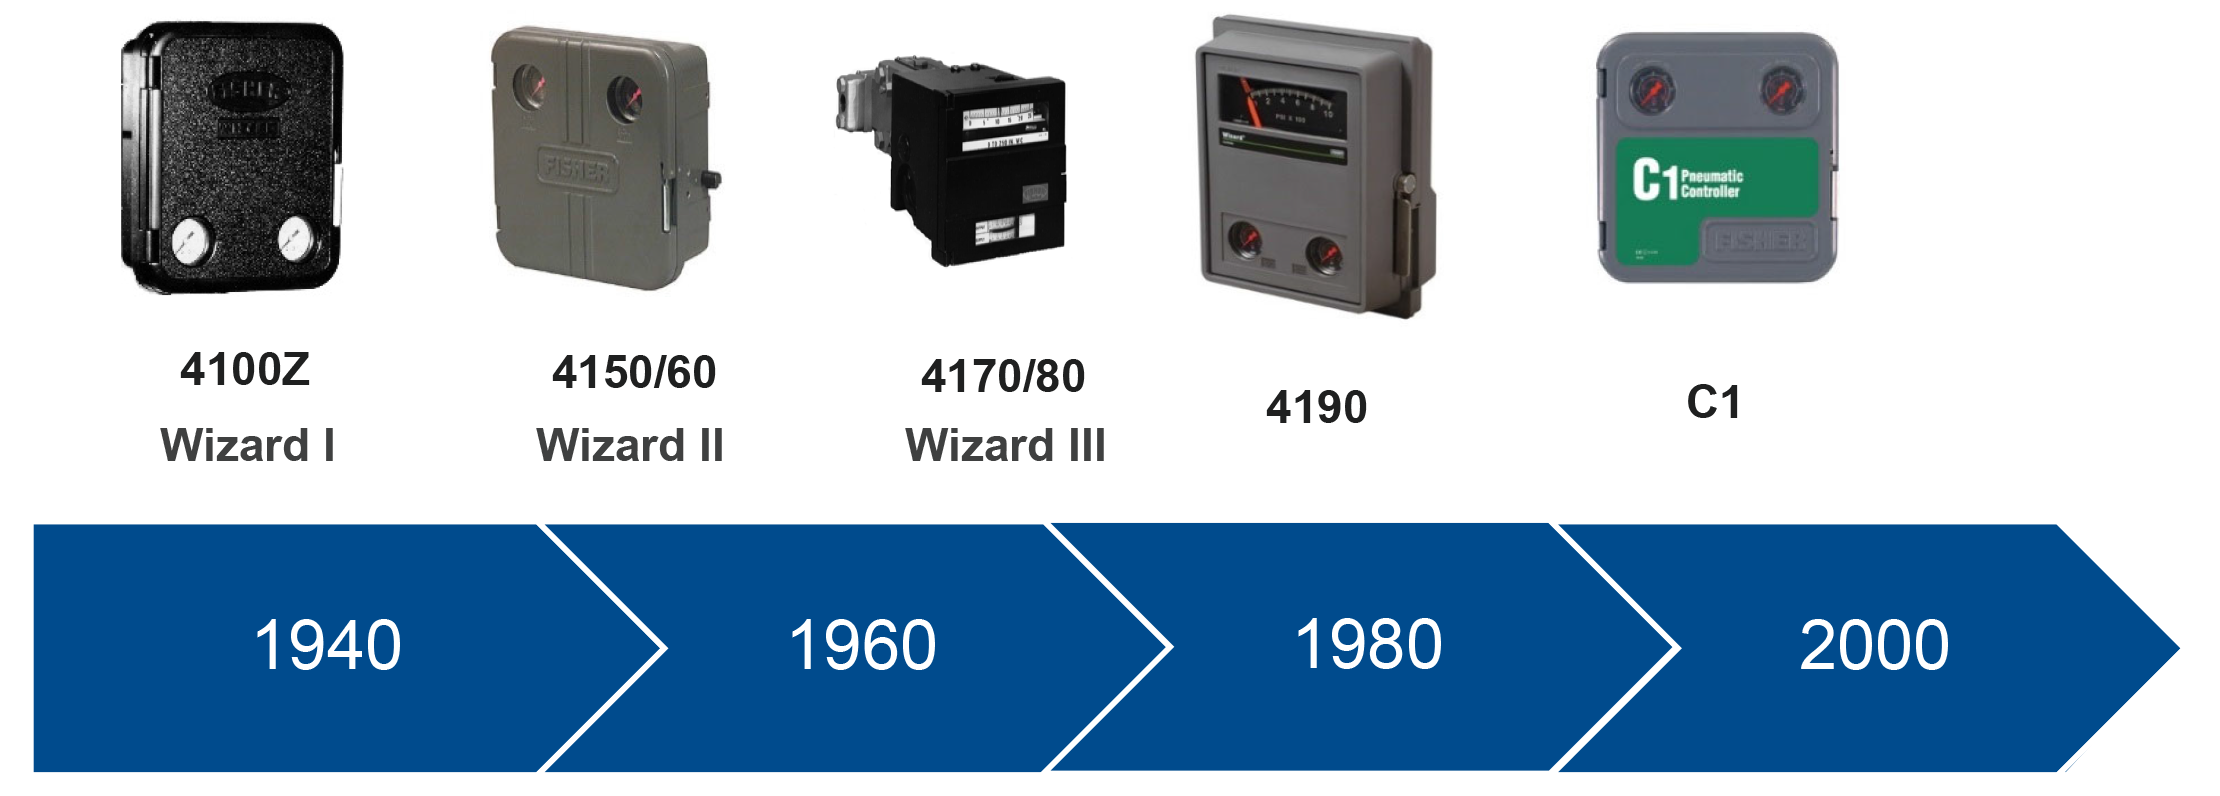 Fisher controller timeline, 1940-2000